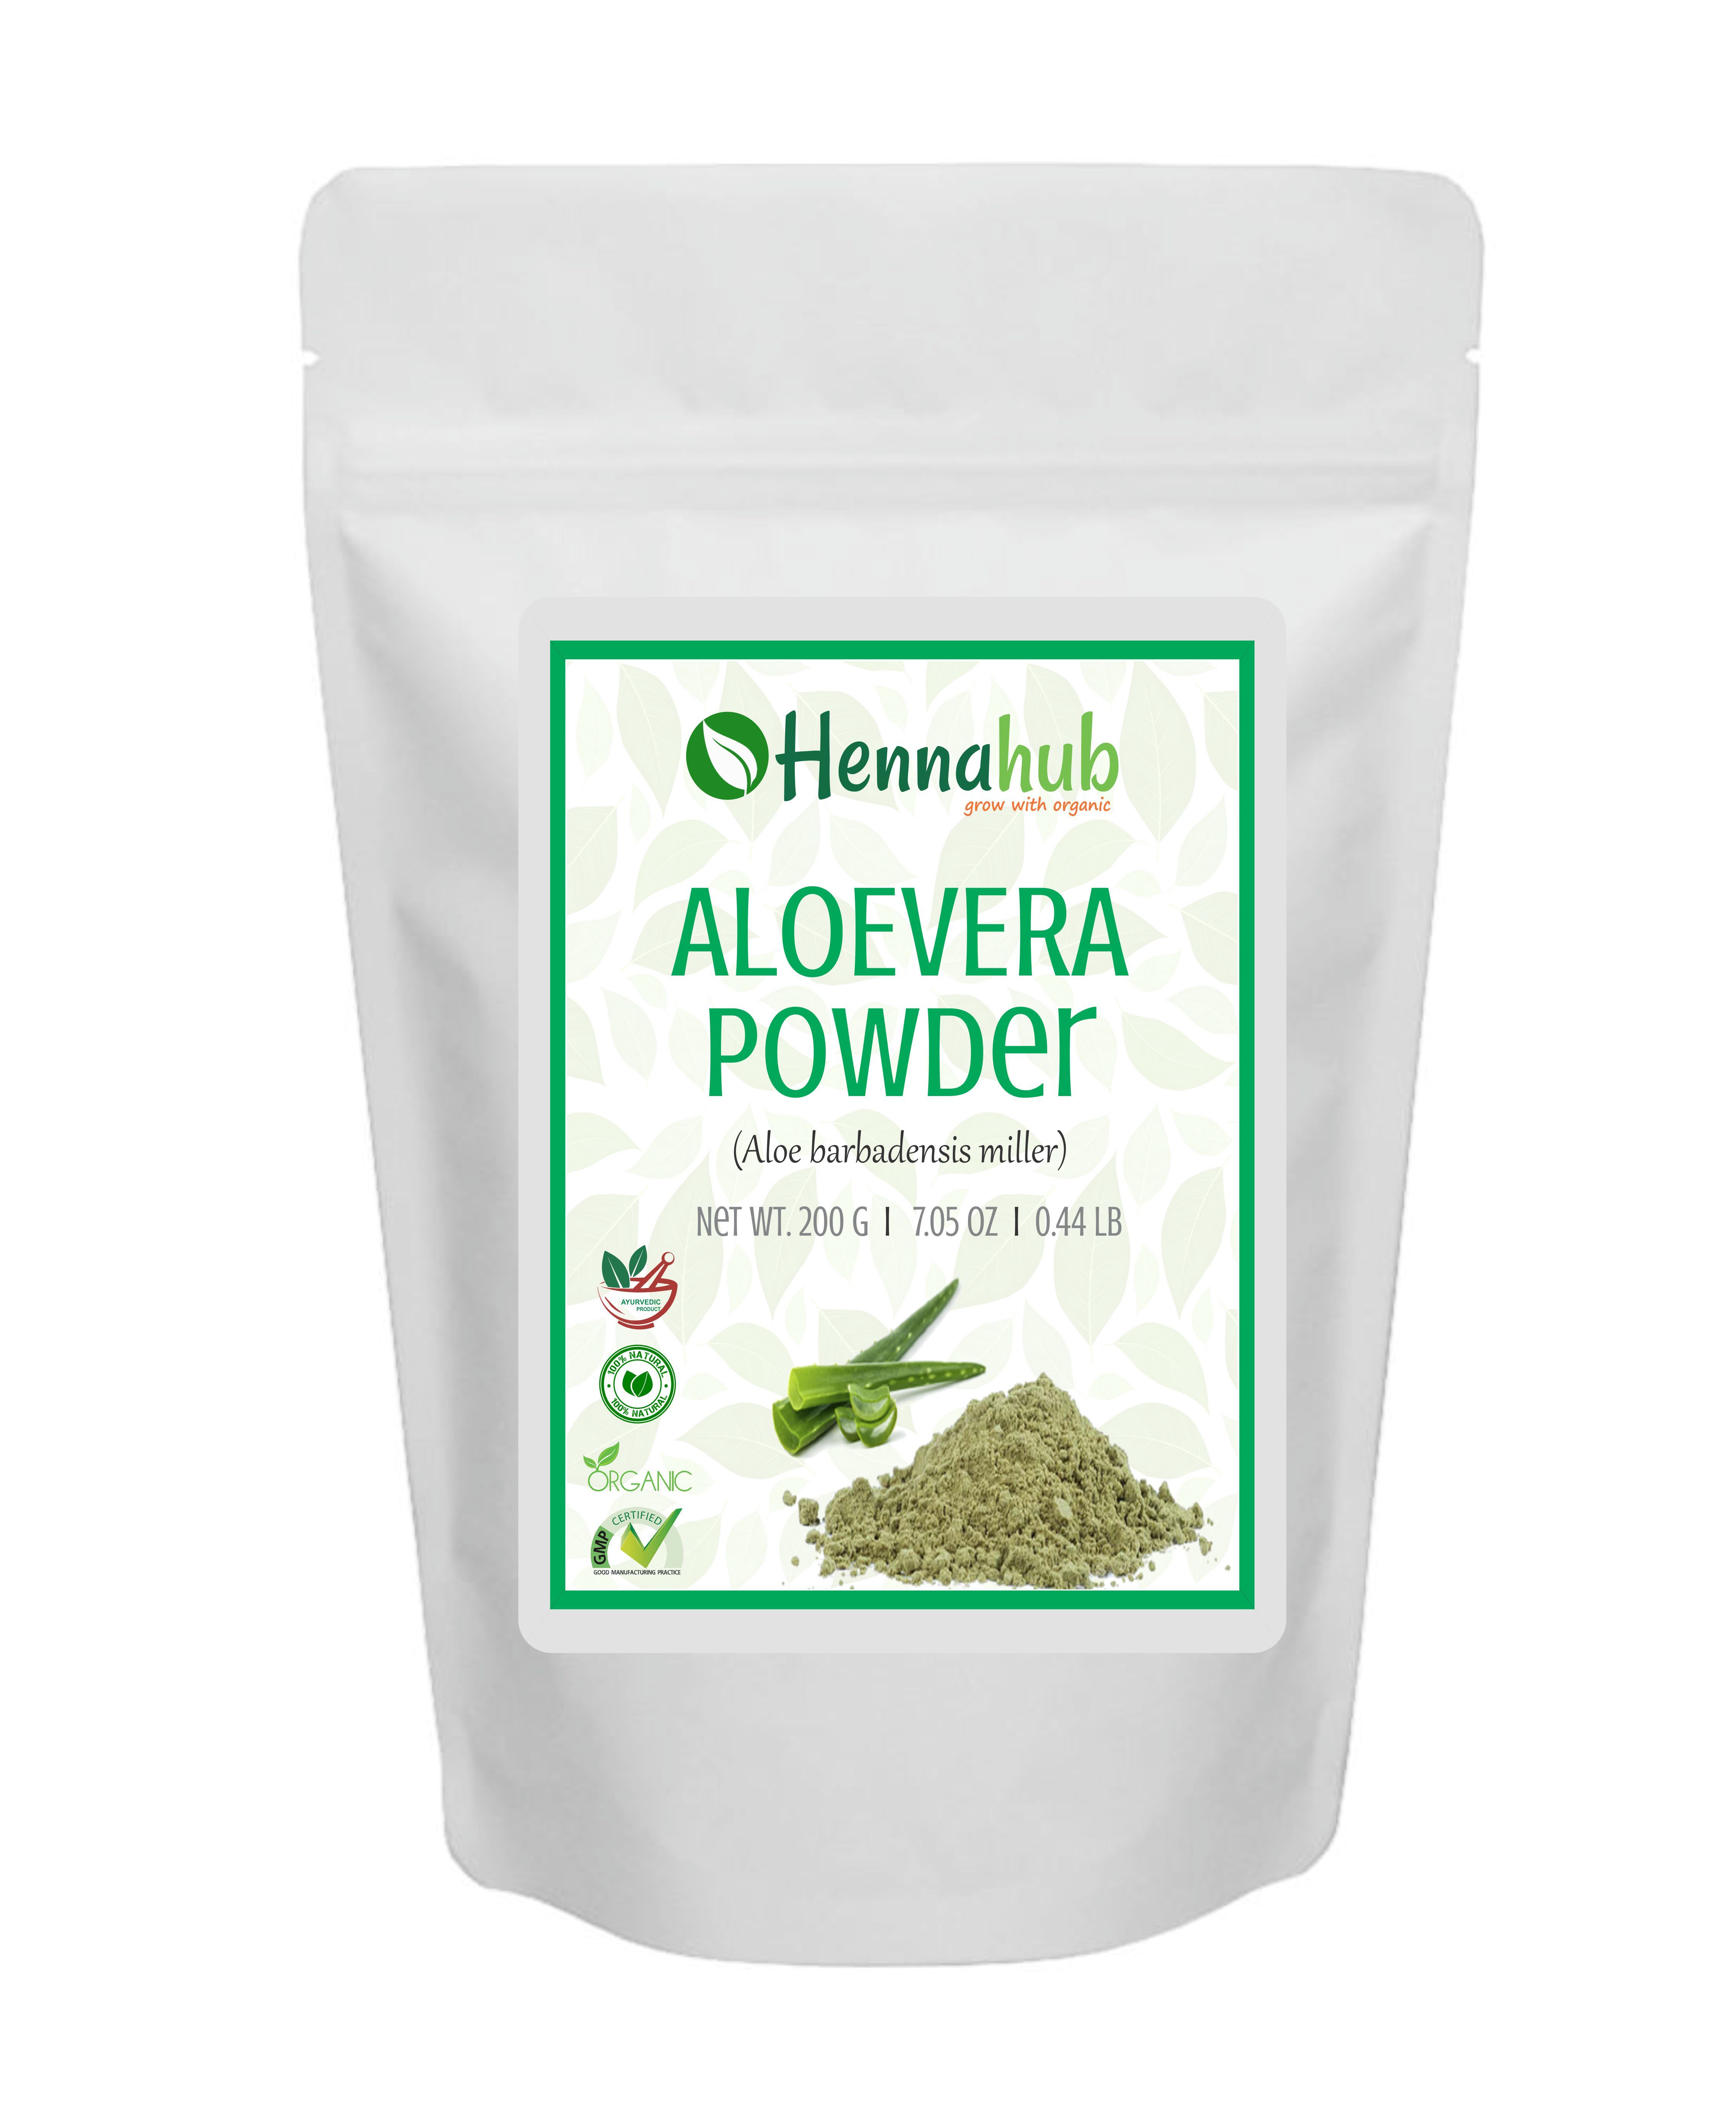 Organic Aloe Vera Powder